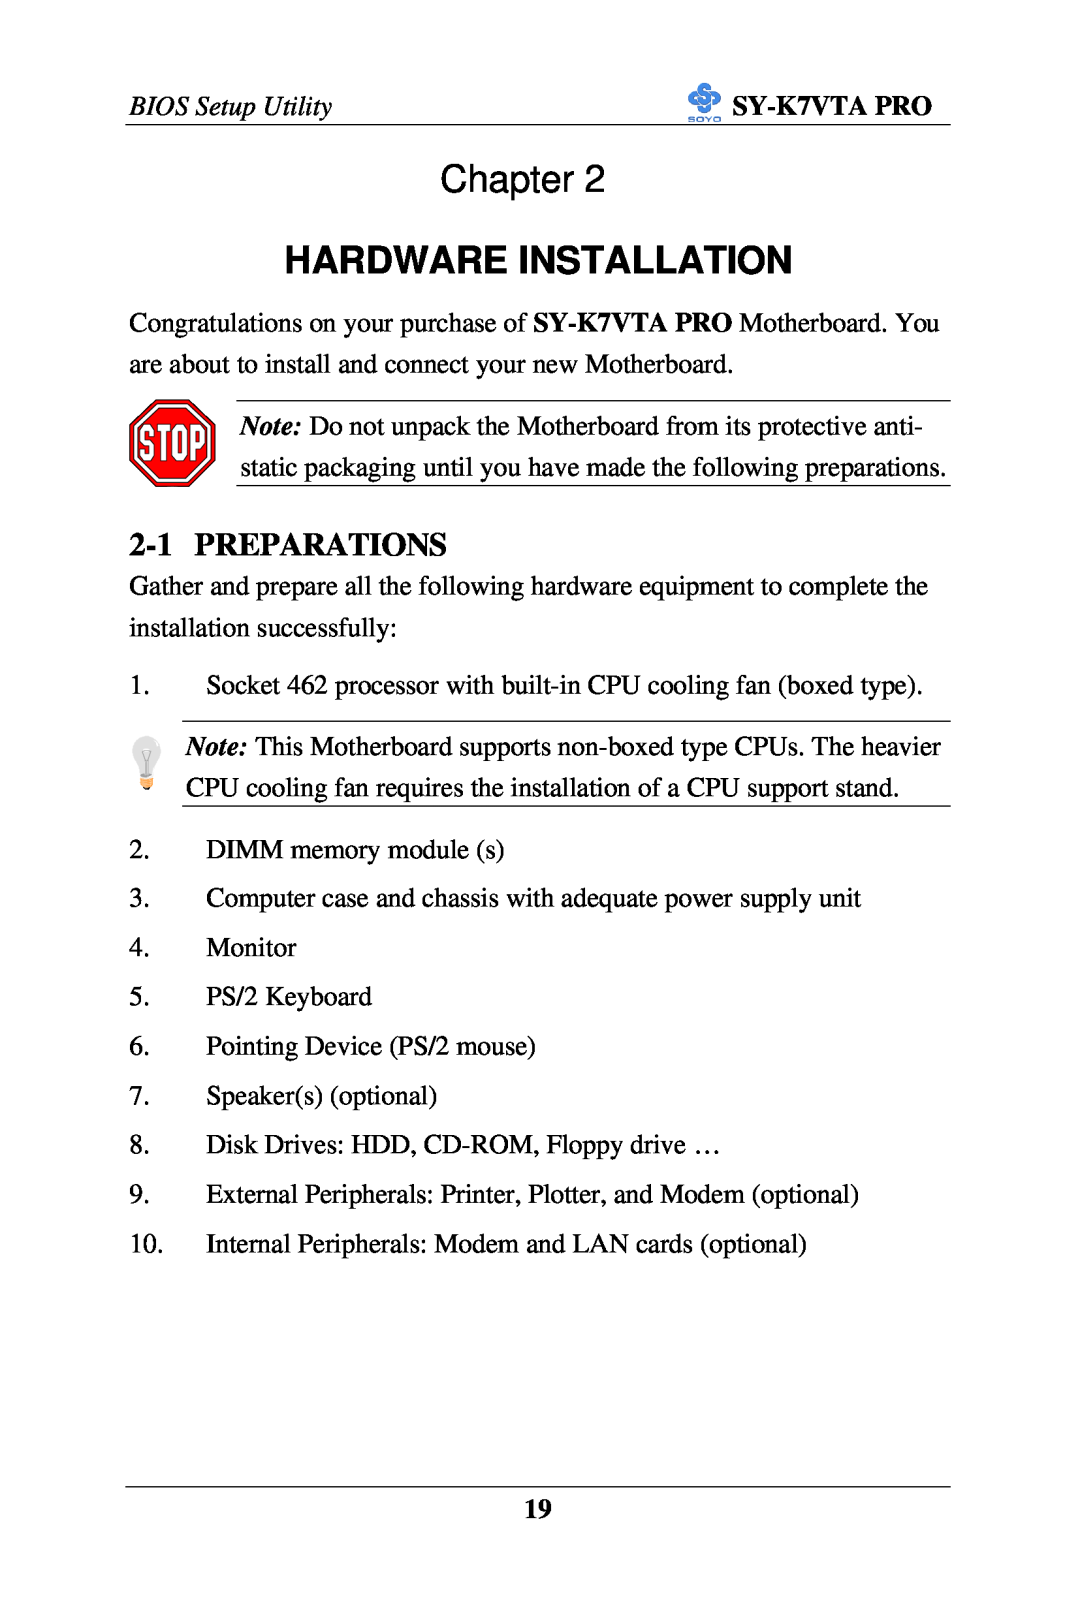 SOYO SY-K7VTA PRO user manual Chapter, Hardware Installation, Preparations, BIOS Setup Utility 